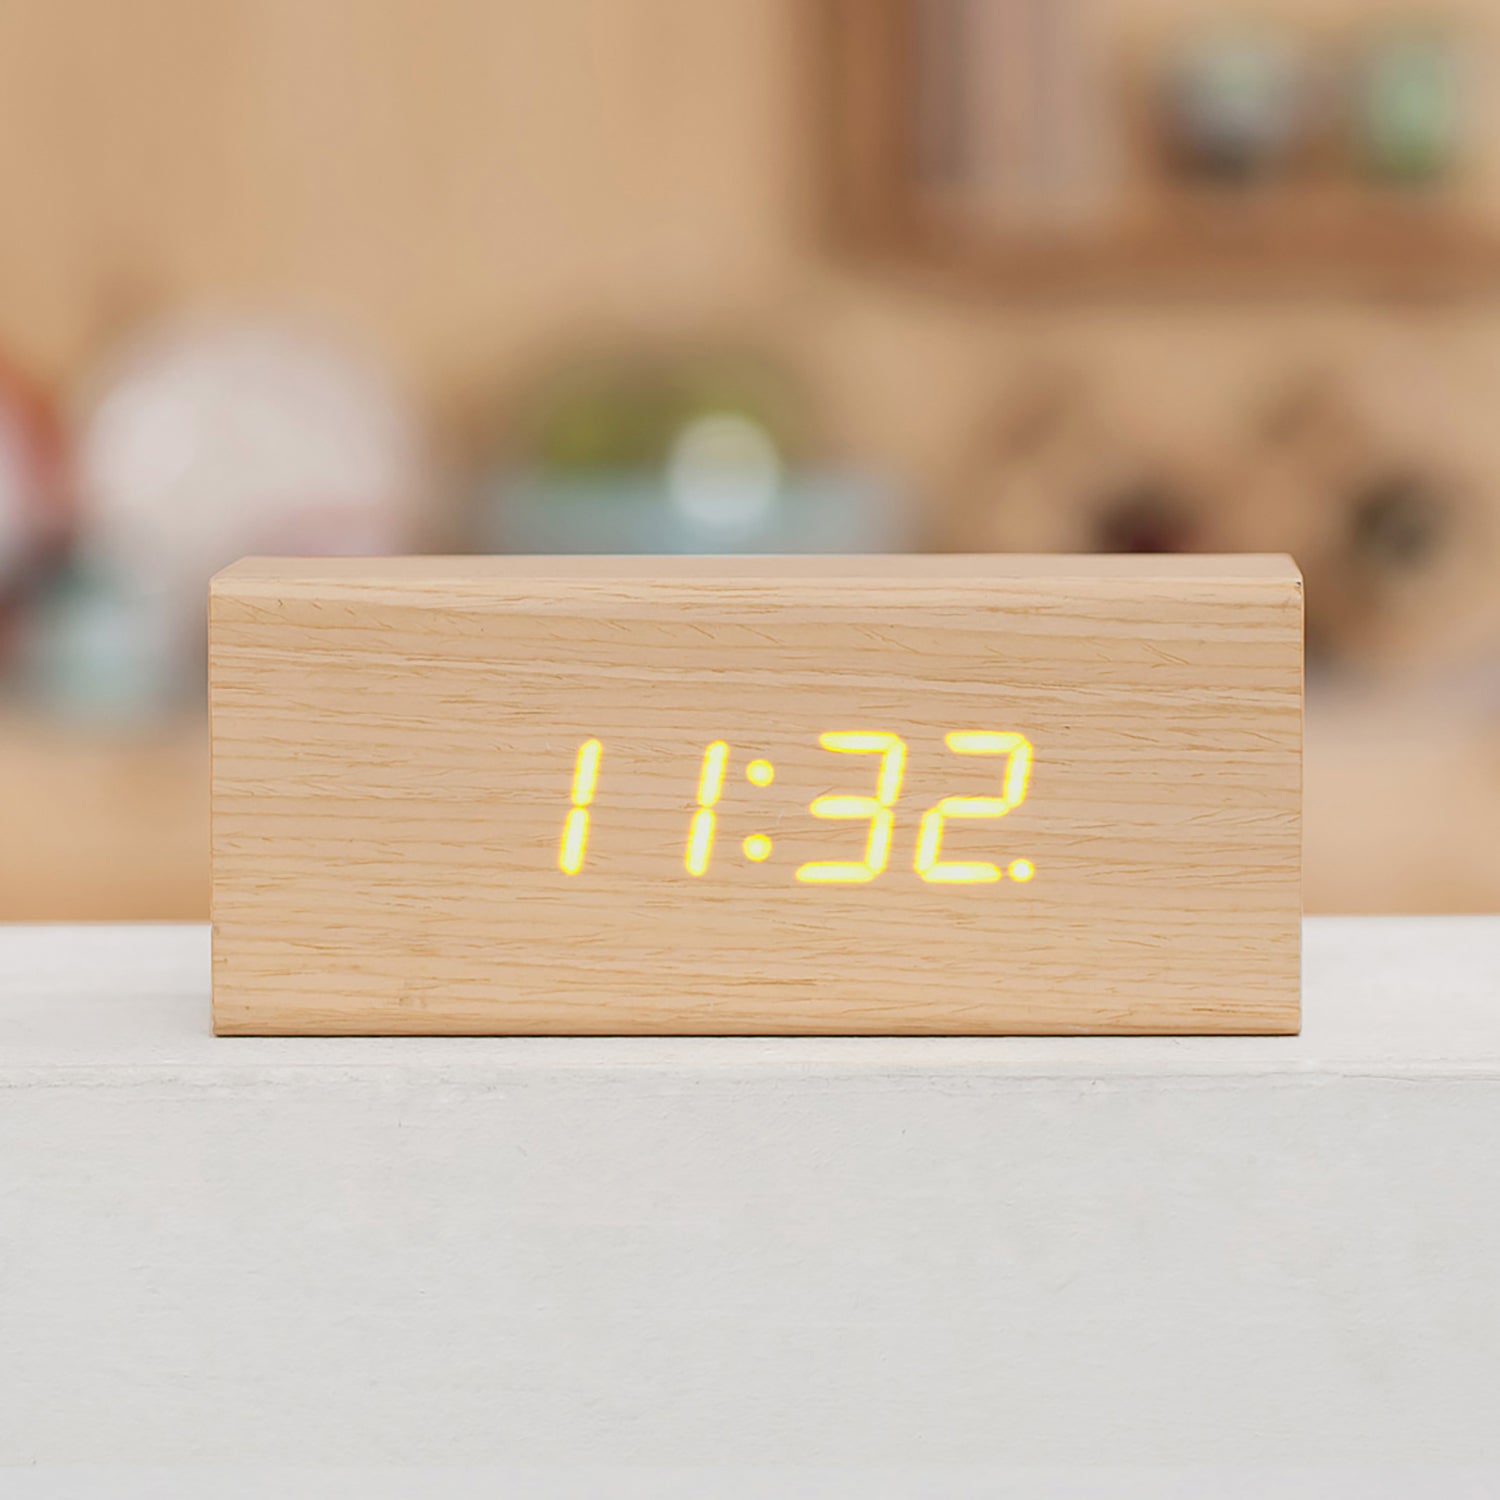 mooas Real Wooden Digital Alarm Clock MO-MDC2MR